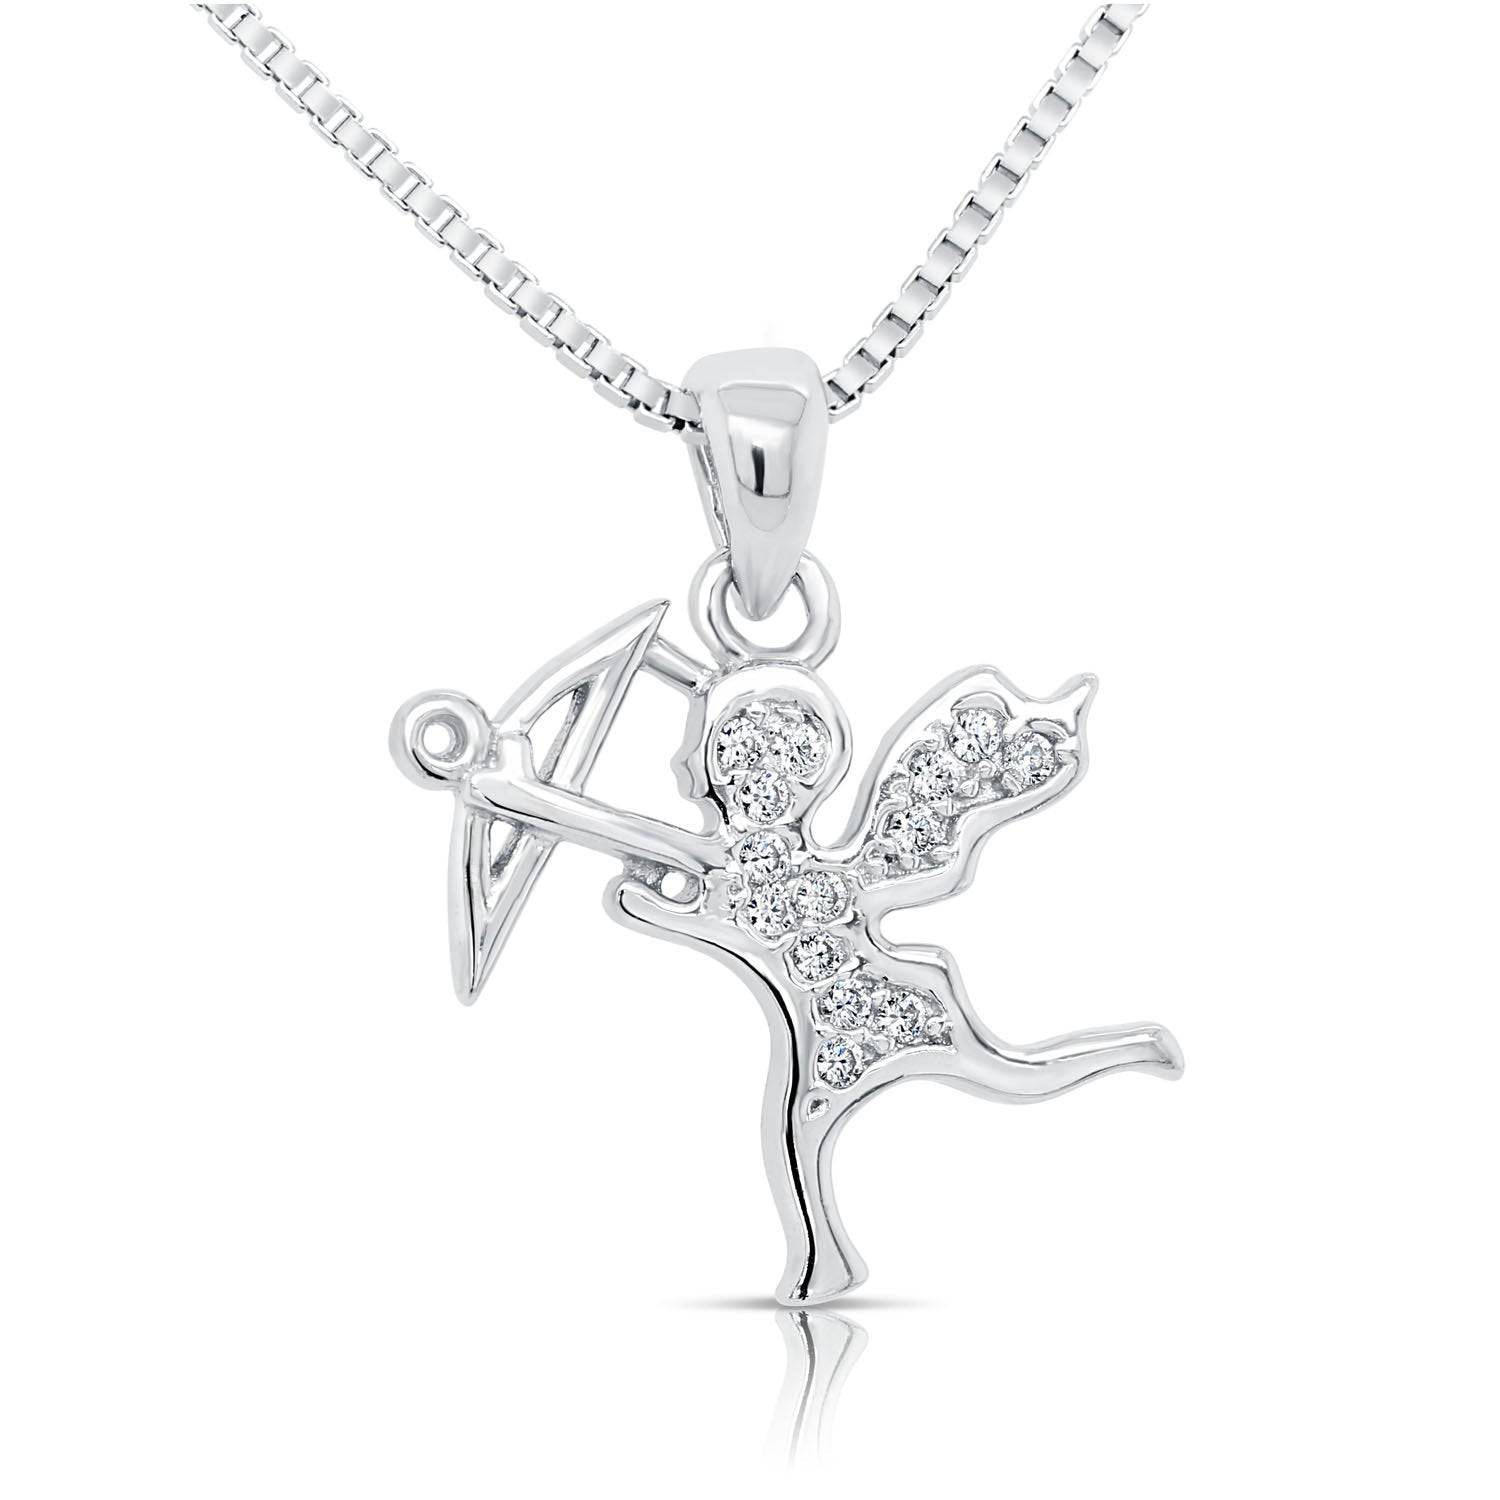 Sterling Silver Cupid Charm Necklace, Cherub Cupid